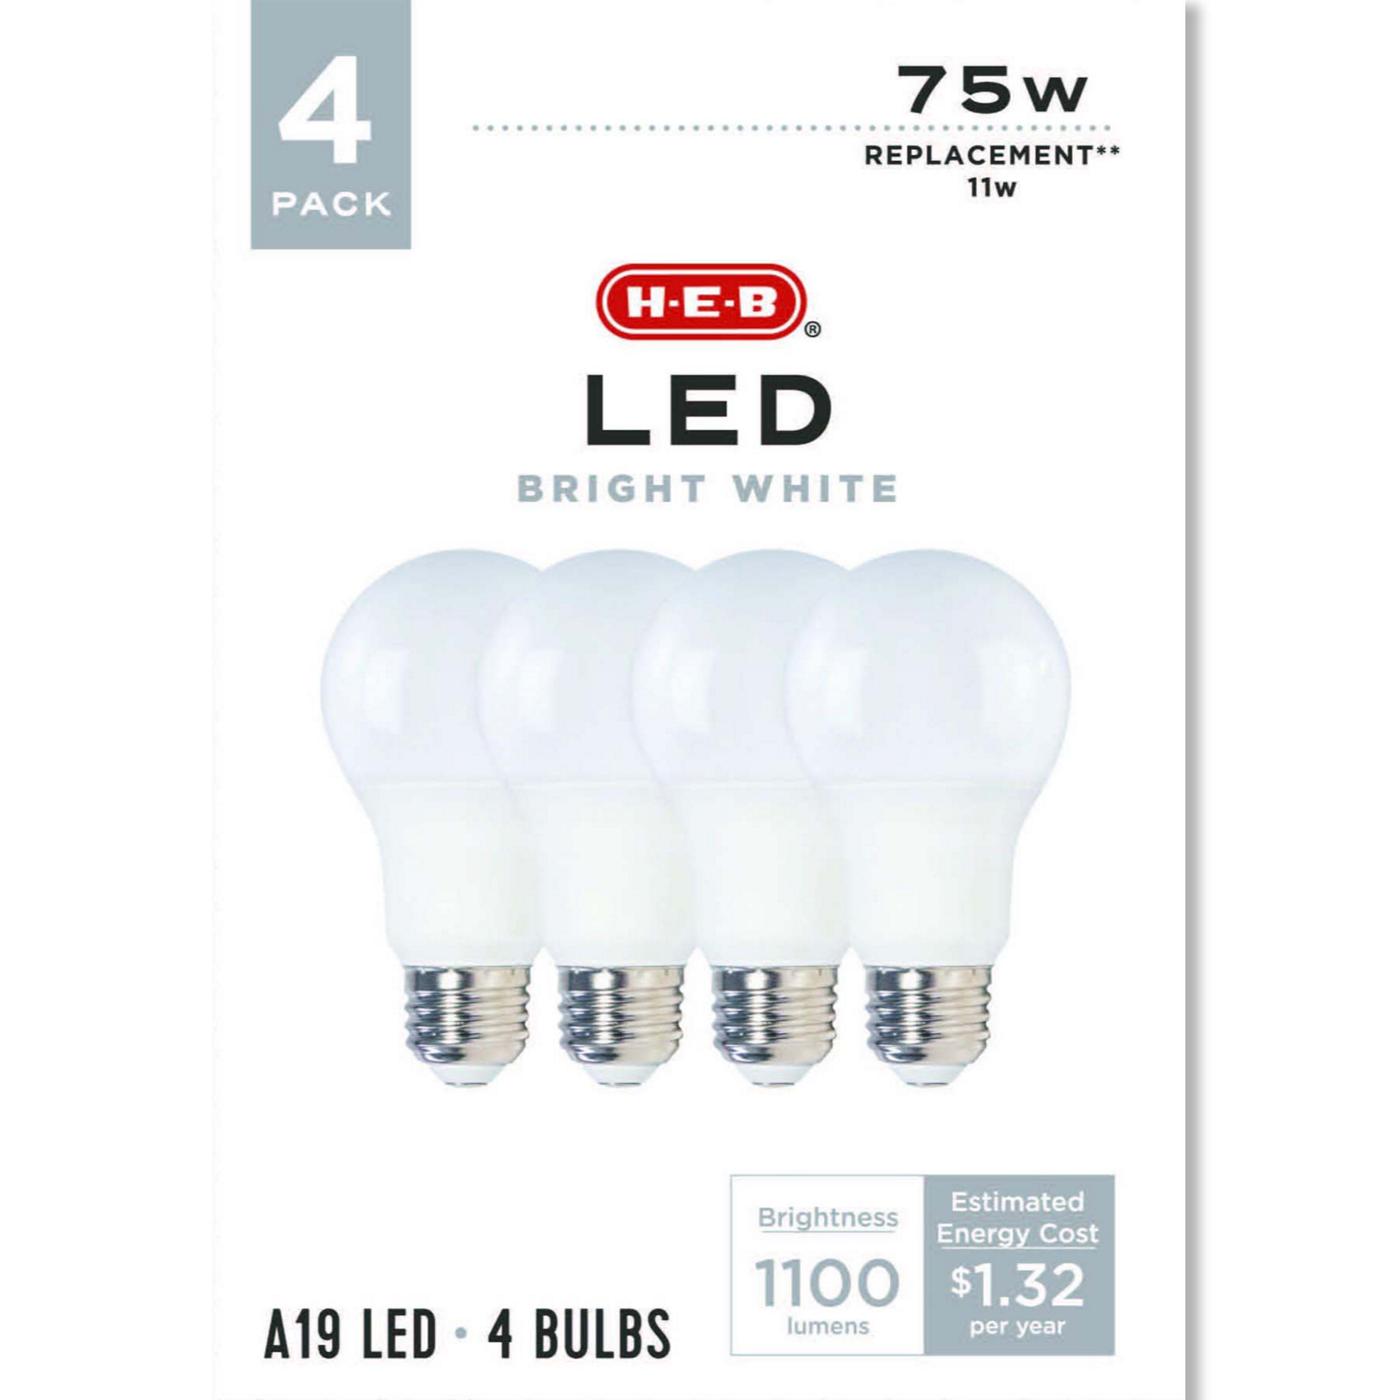 Kano Republikeinse partij Dader H-E-B A19 75-Watt Bright White LED Light Bulbs - Shop Light Bulbs at H-E-B